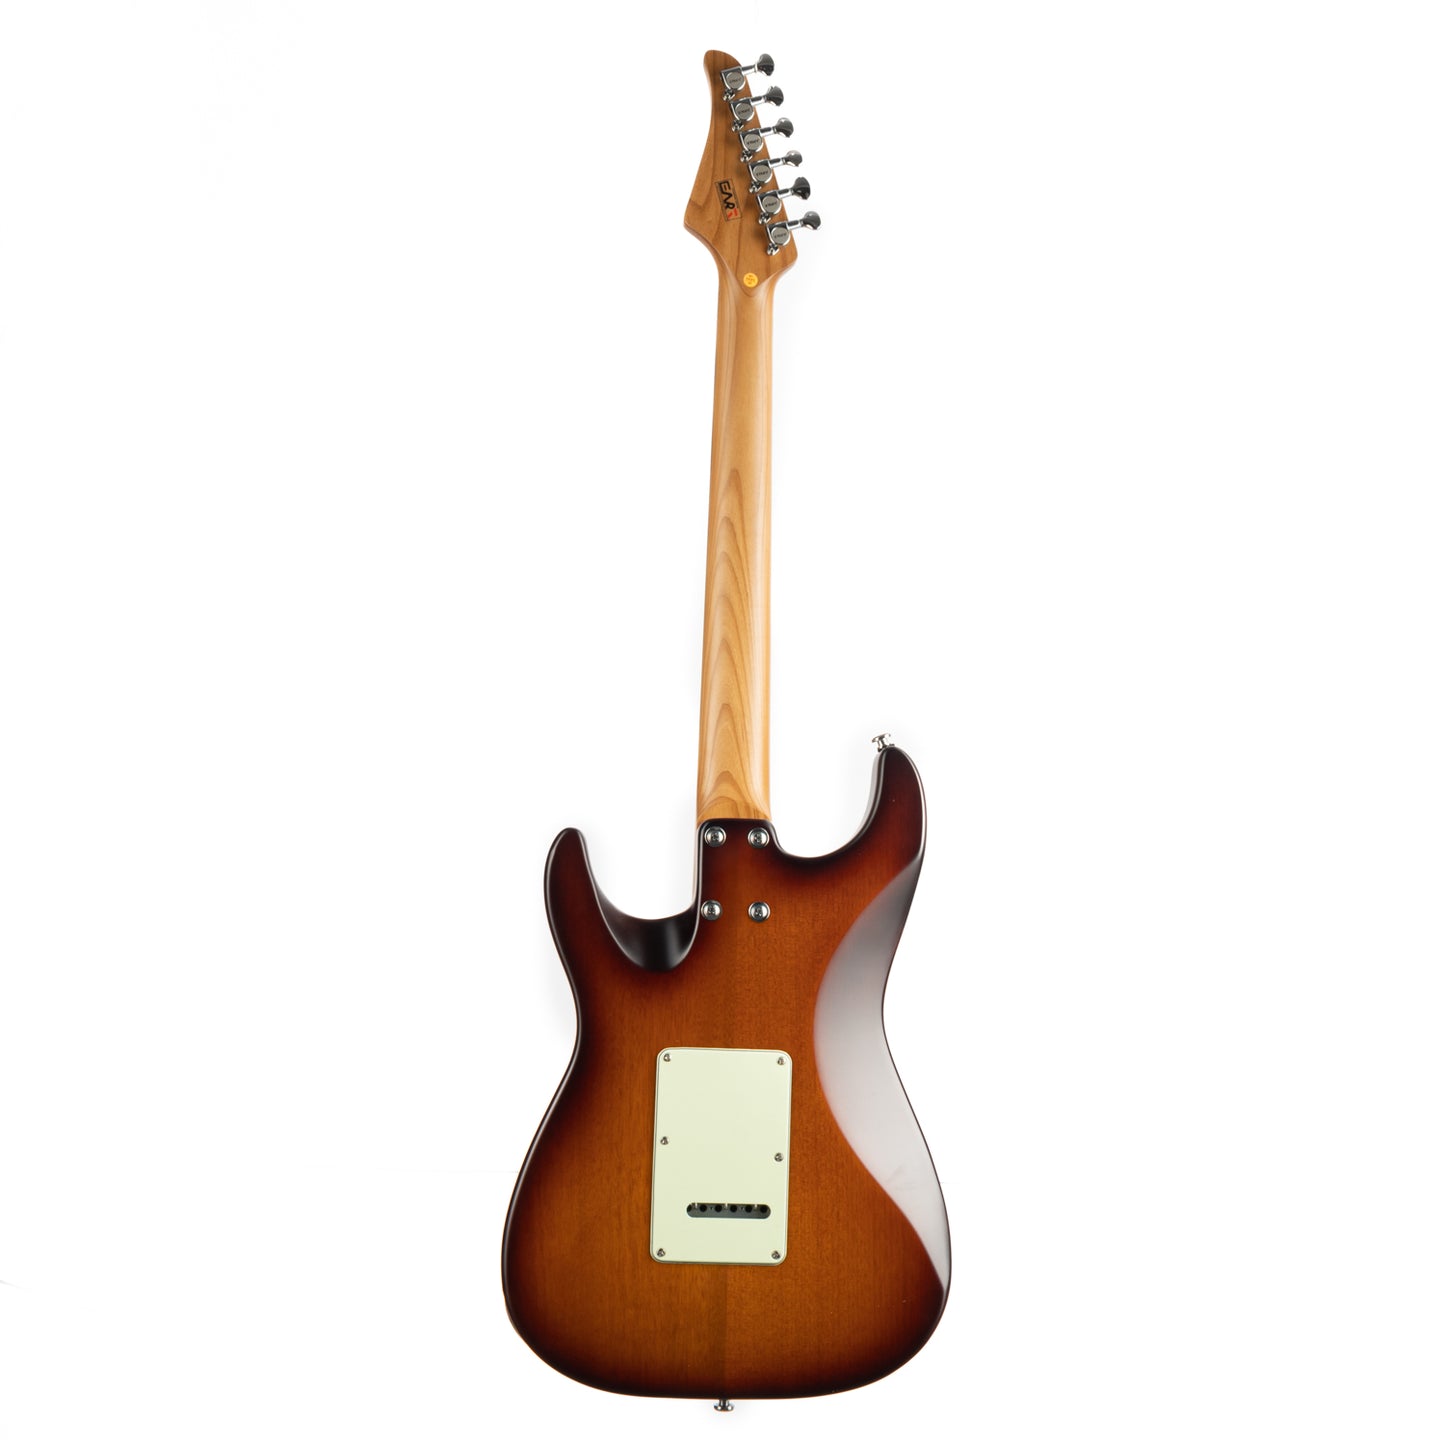 Eart Guitars, YMX-SG3, SSS Ceramic Single Coil Pickups Vintage Style Electric Guitar, Brown Sunburst